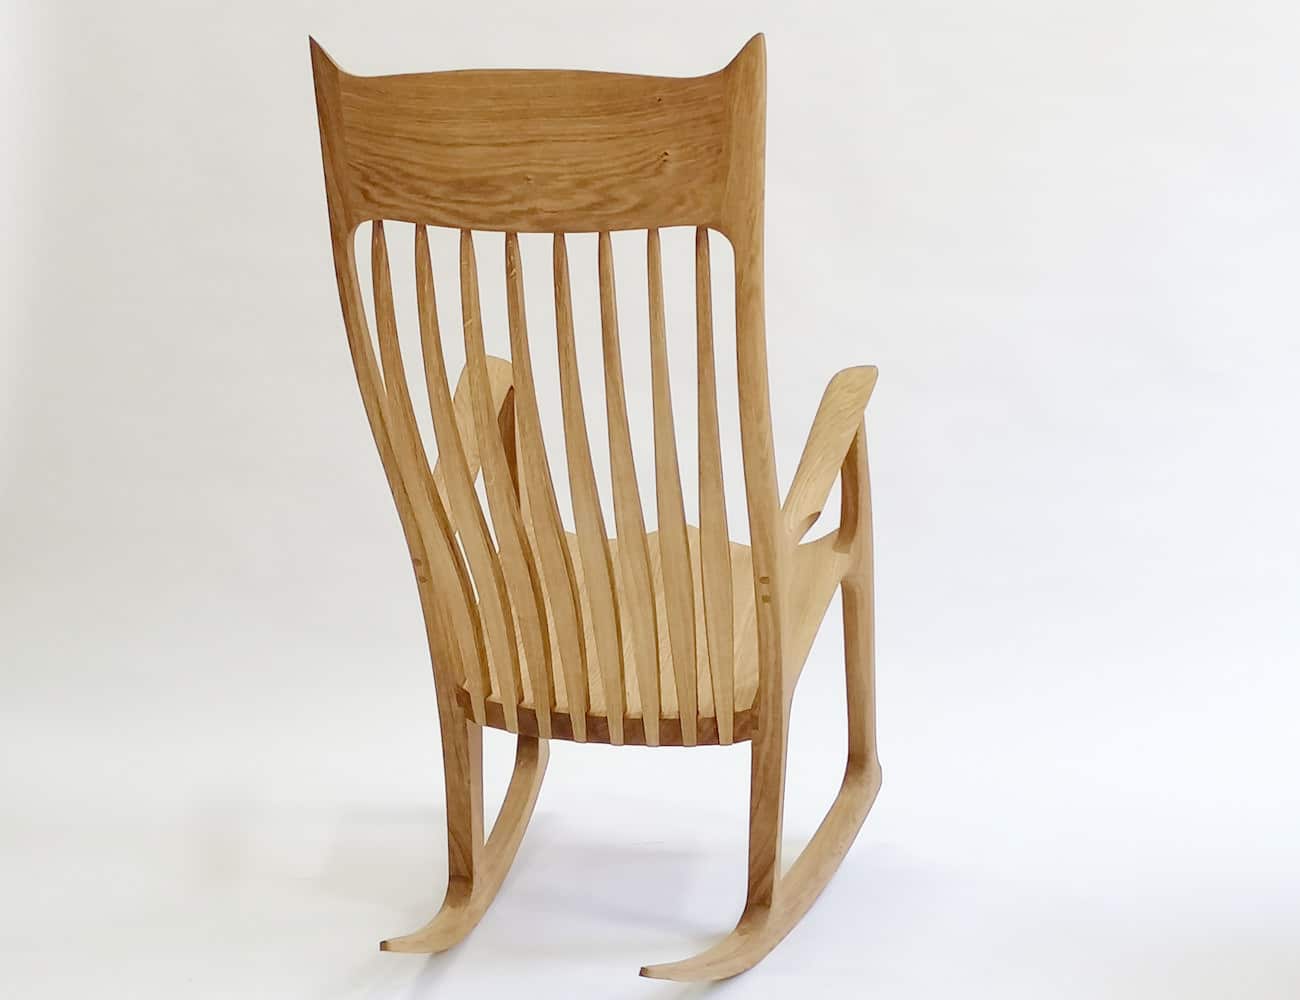 Rocking Chair made from massiv wood - like the Maloof Rocker